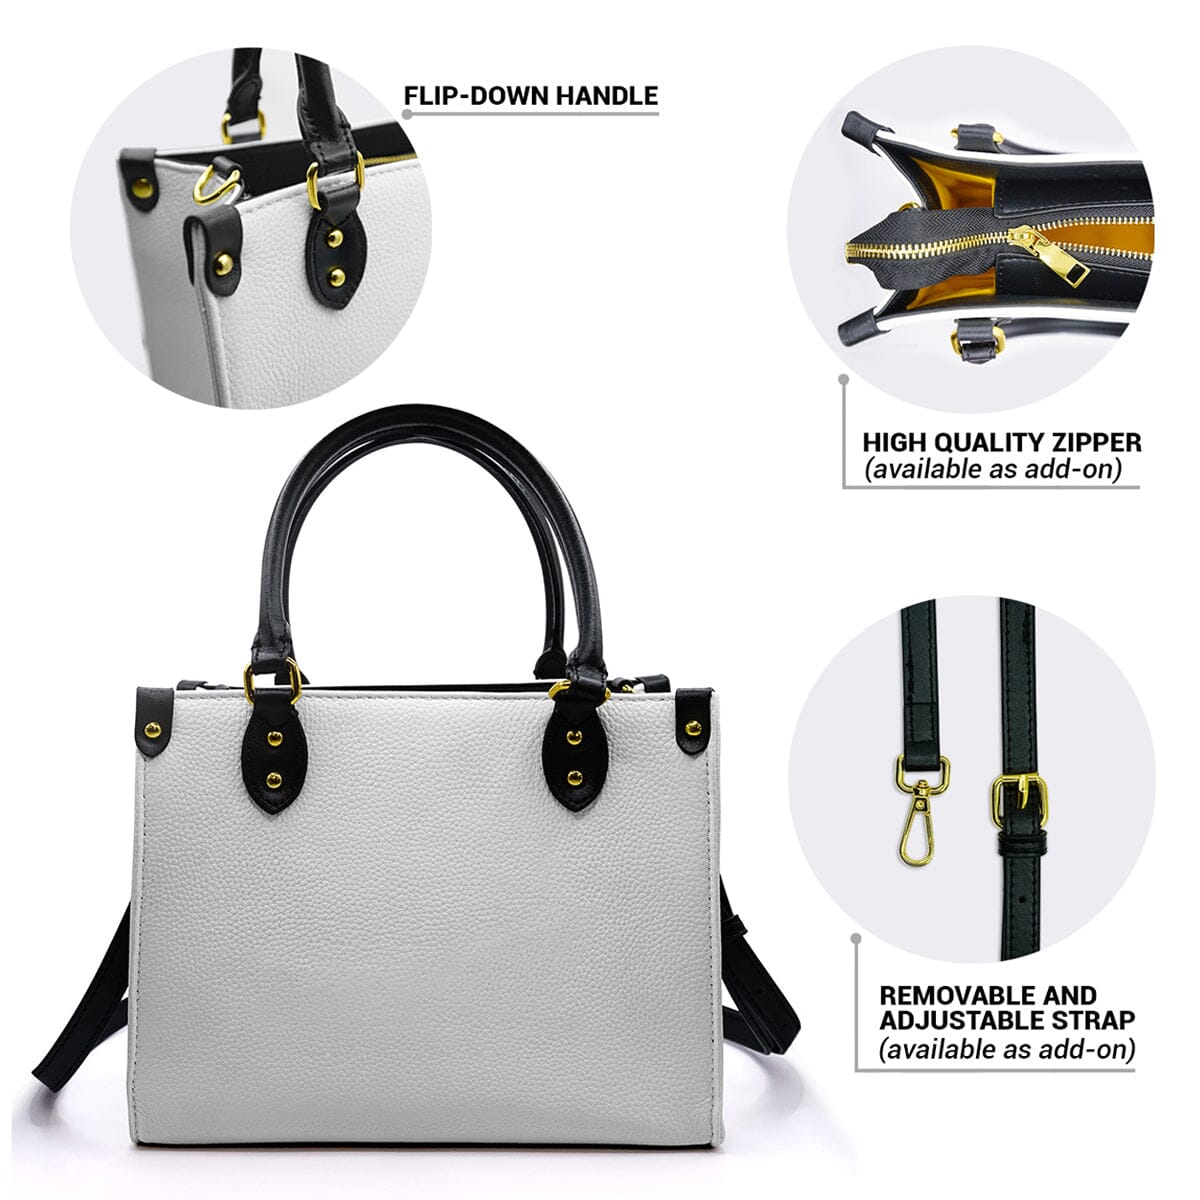 Ethnic African Geometric Pattern Leather Handbag Leather Handbag Highcommerce 